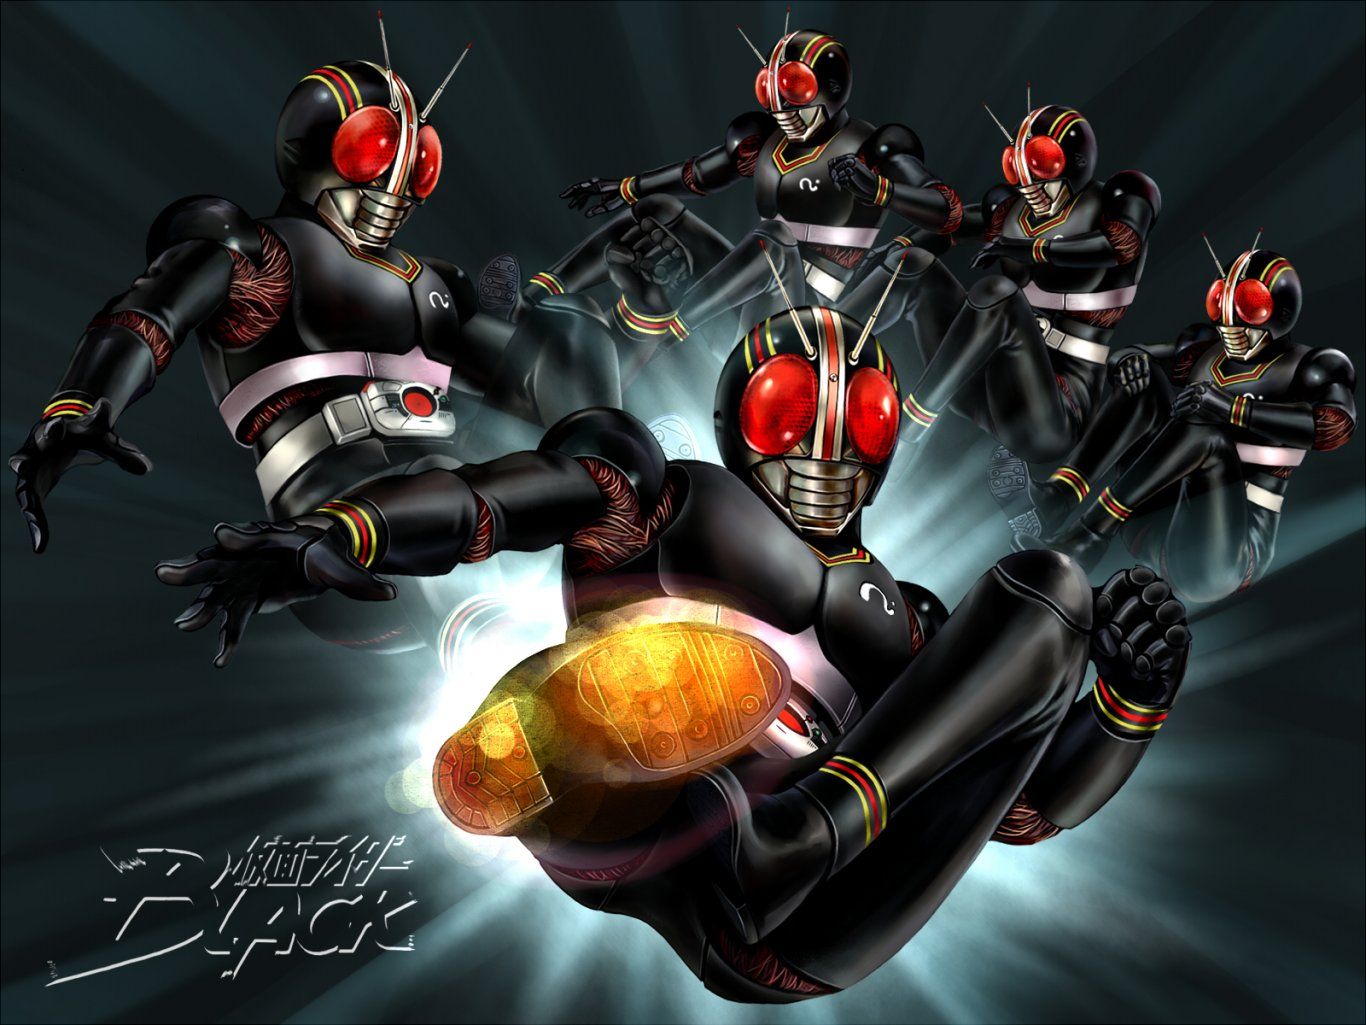 Henshin and Rollout Kamen Rider Wallpaper